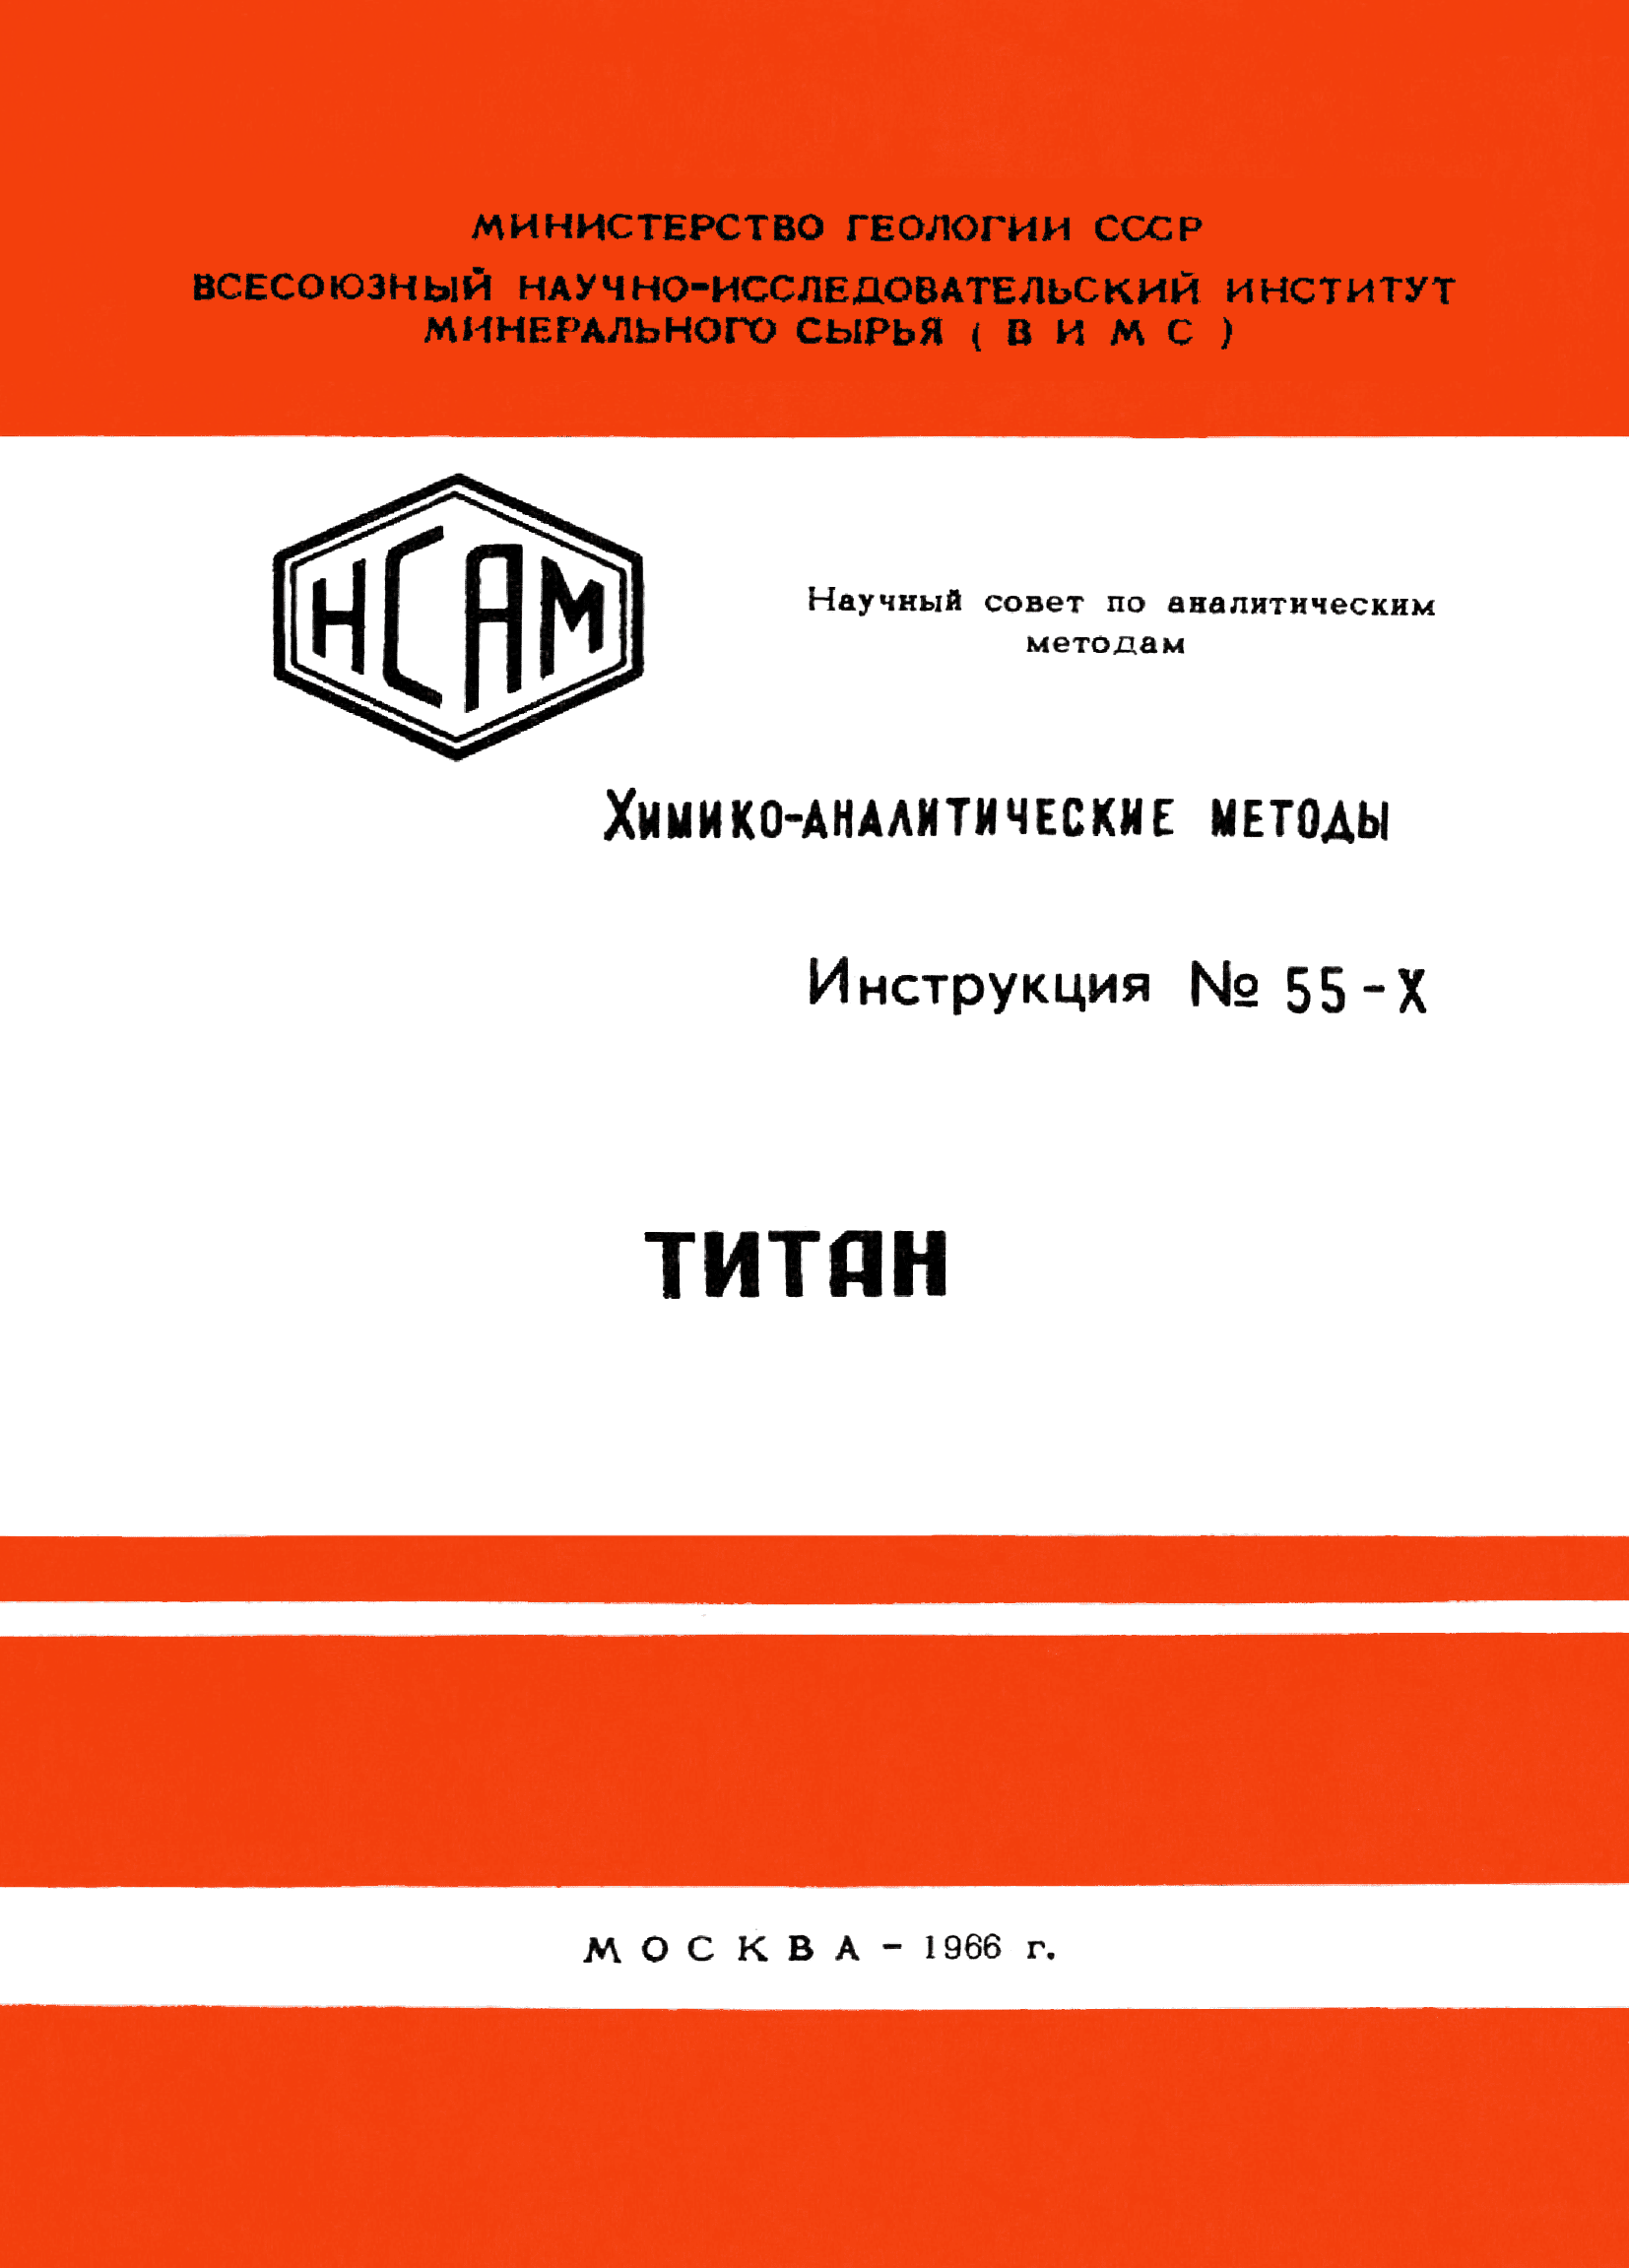 Инструкция НСАМ 55-Х